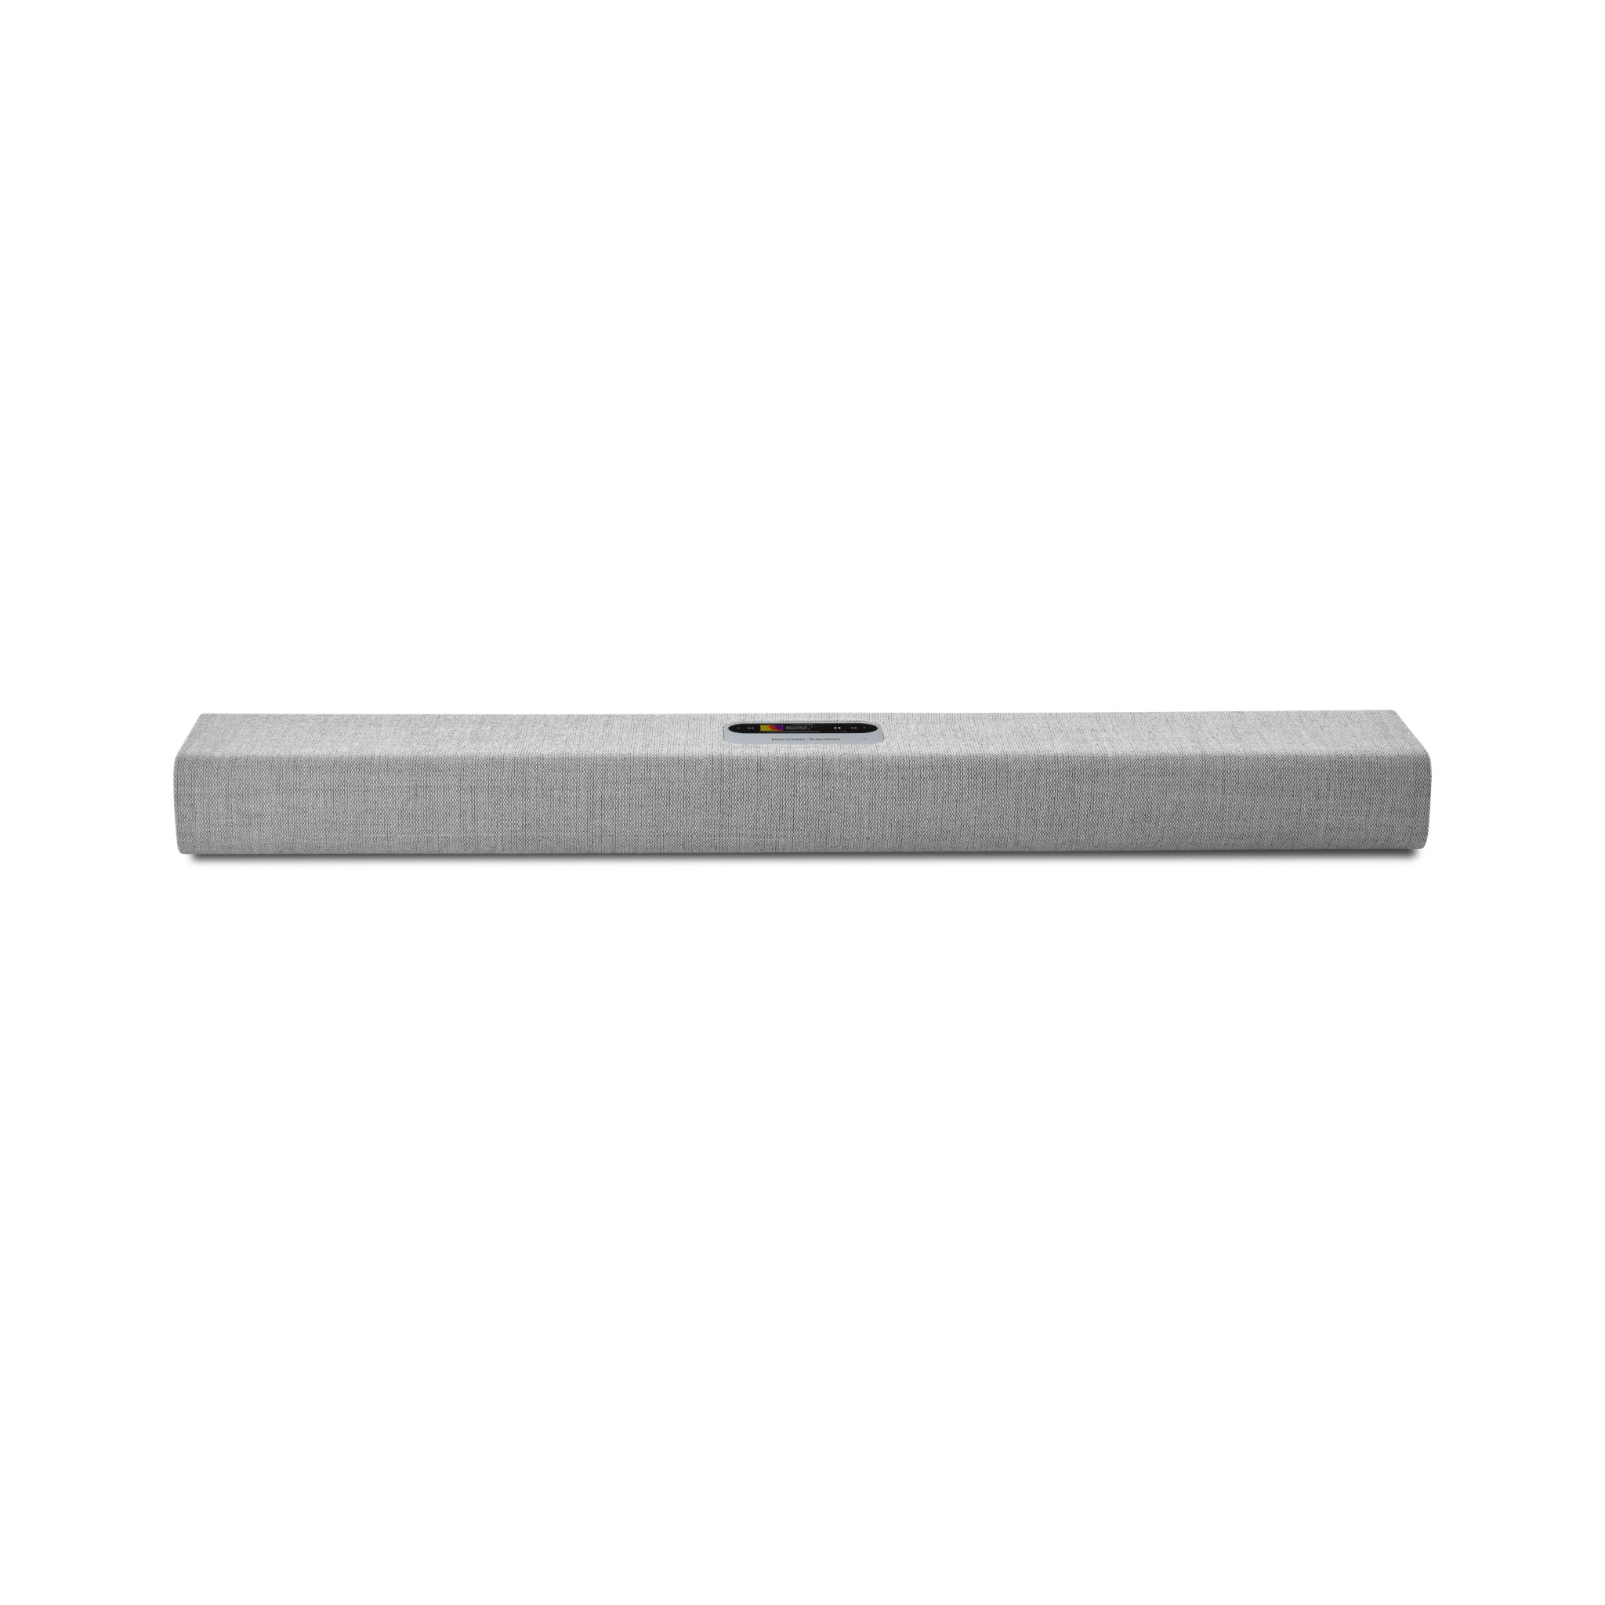 Harman Kardon Citation MultiBeam™ 700 - Grey - The smartest, compact soundbar with MultiBeam™ surround sound - Front